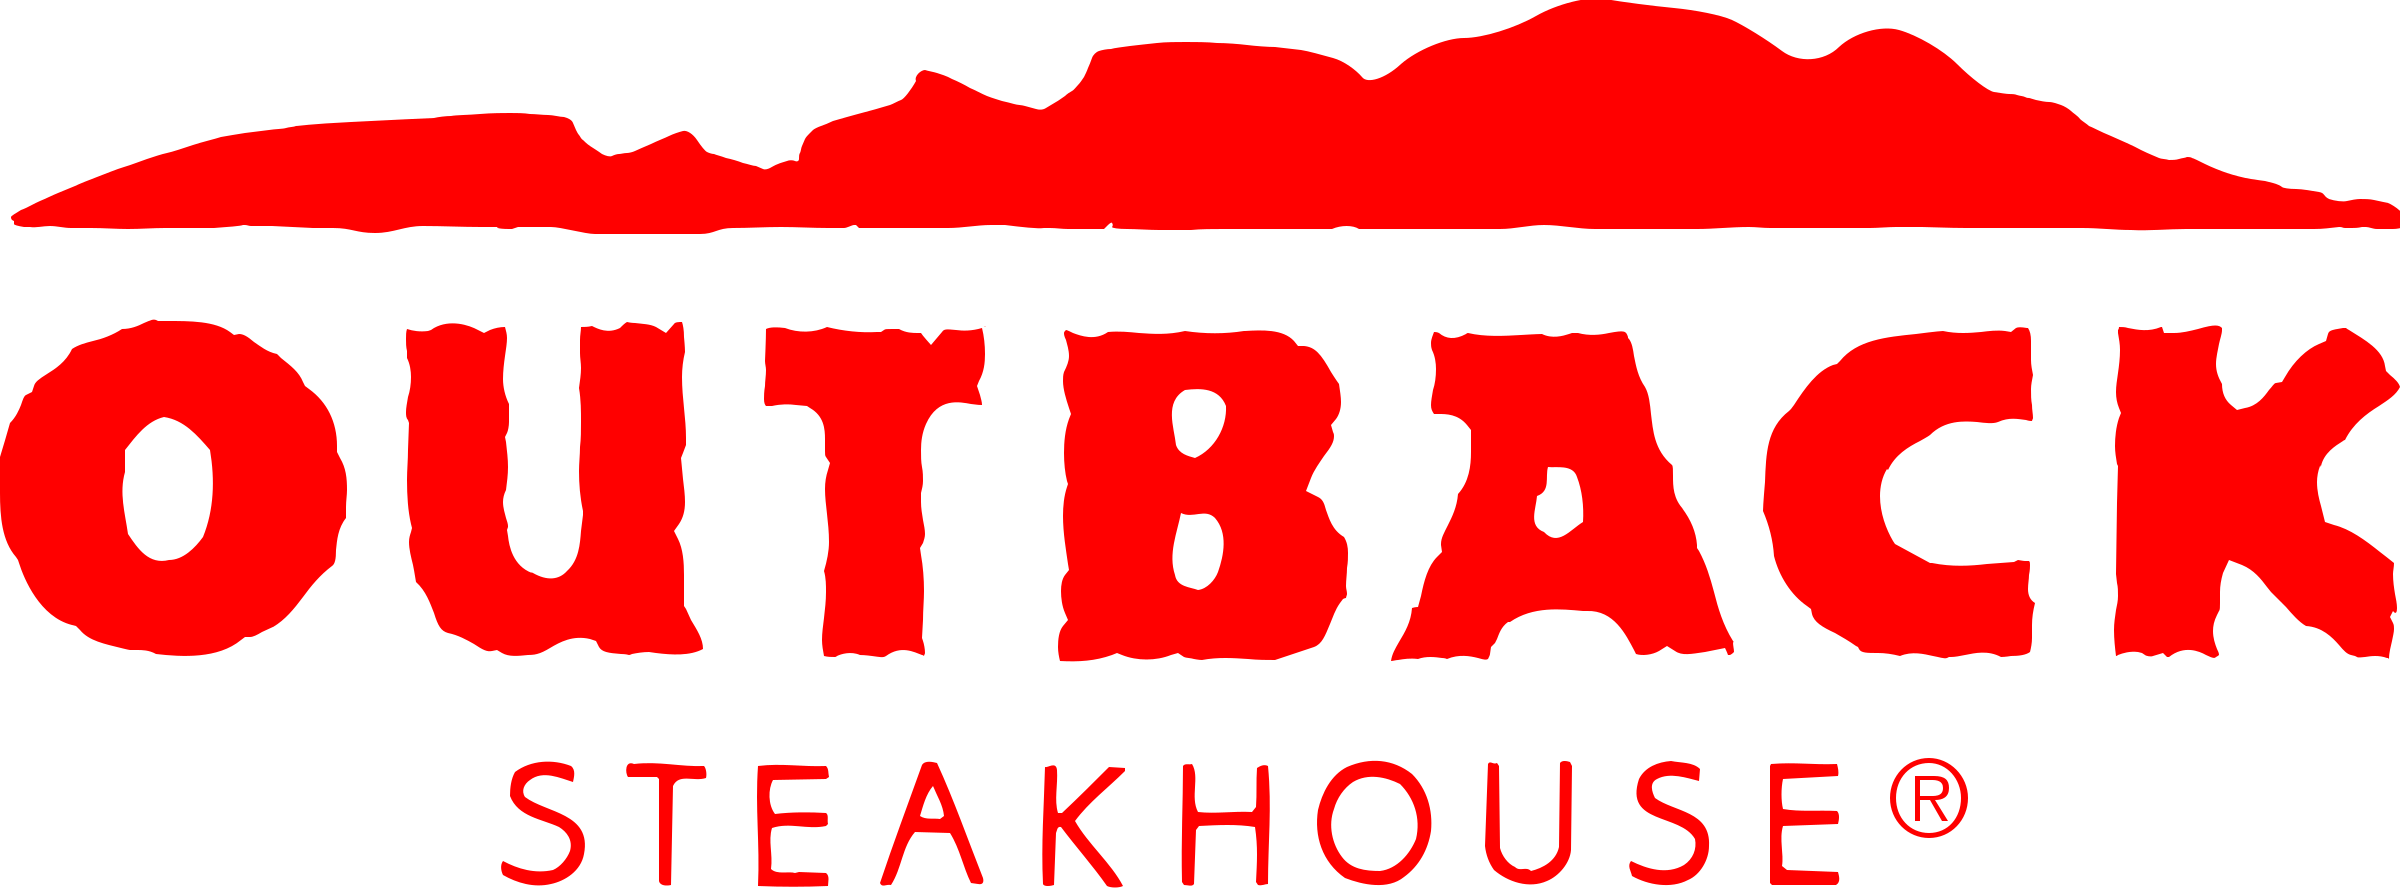 outback-steakhouse-3-logo-png-transparent.png